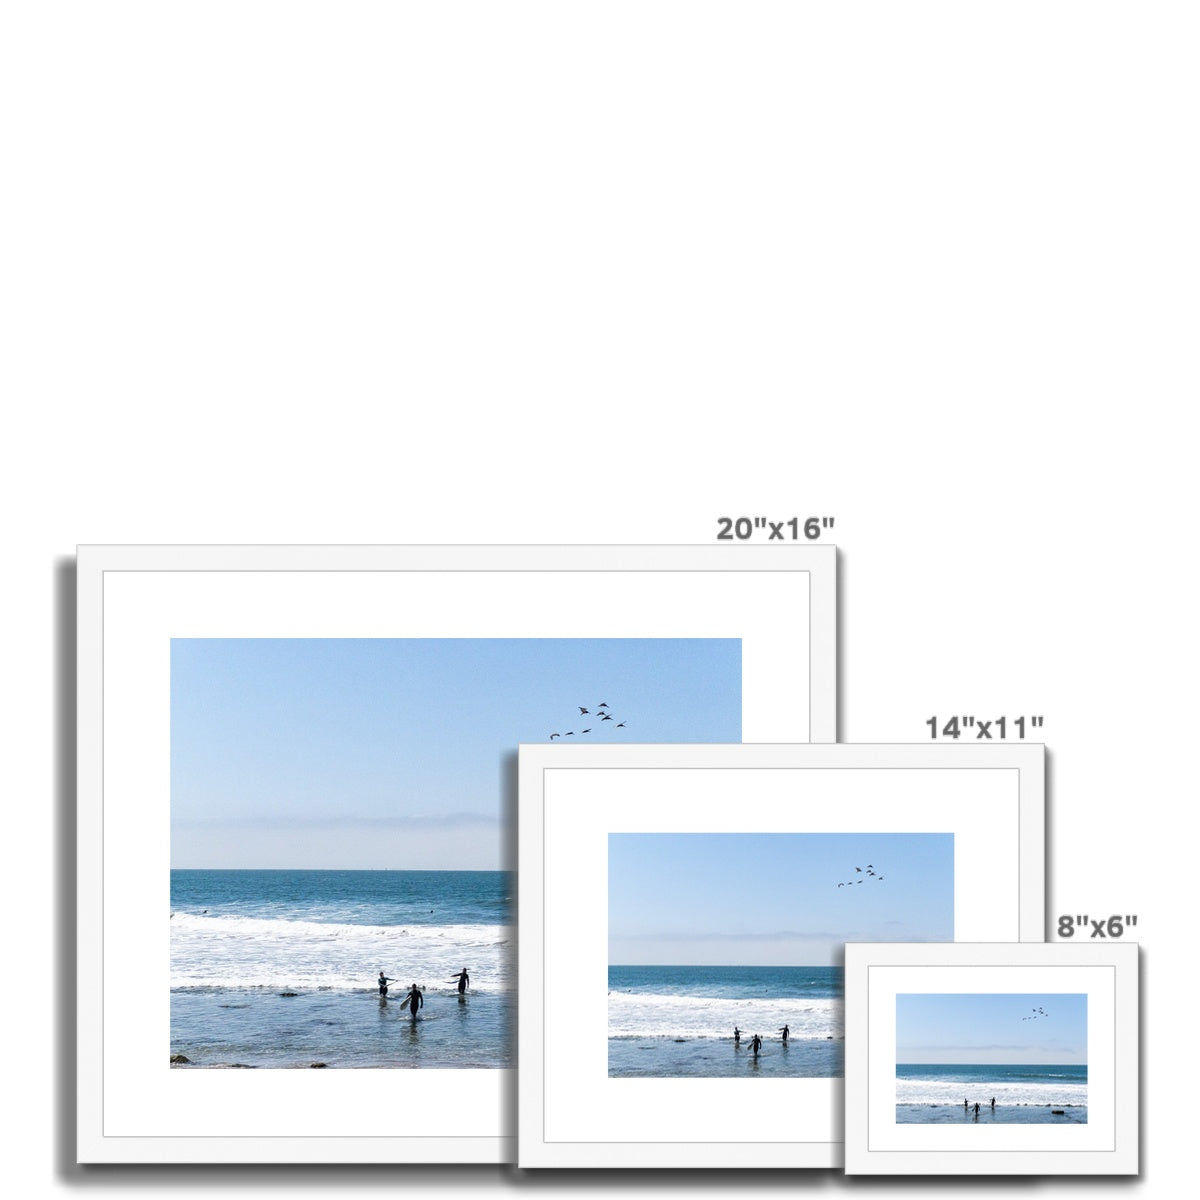 Flock of Surfers 2 Framed & Mounted Print